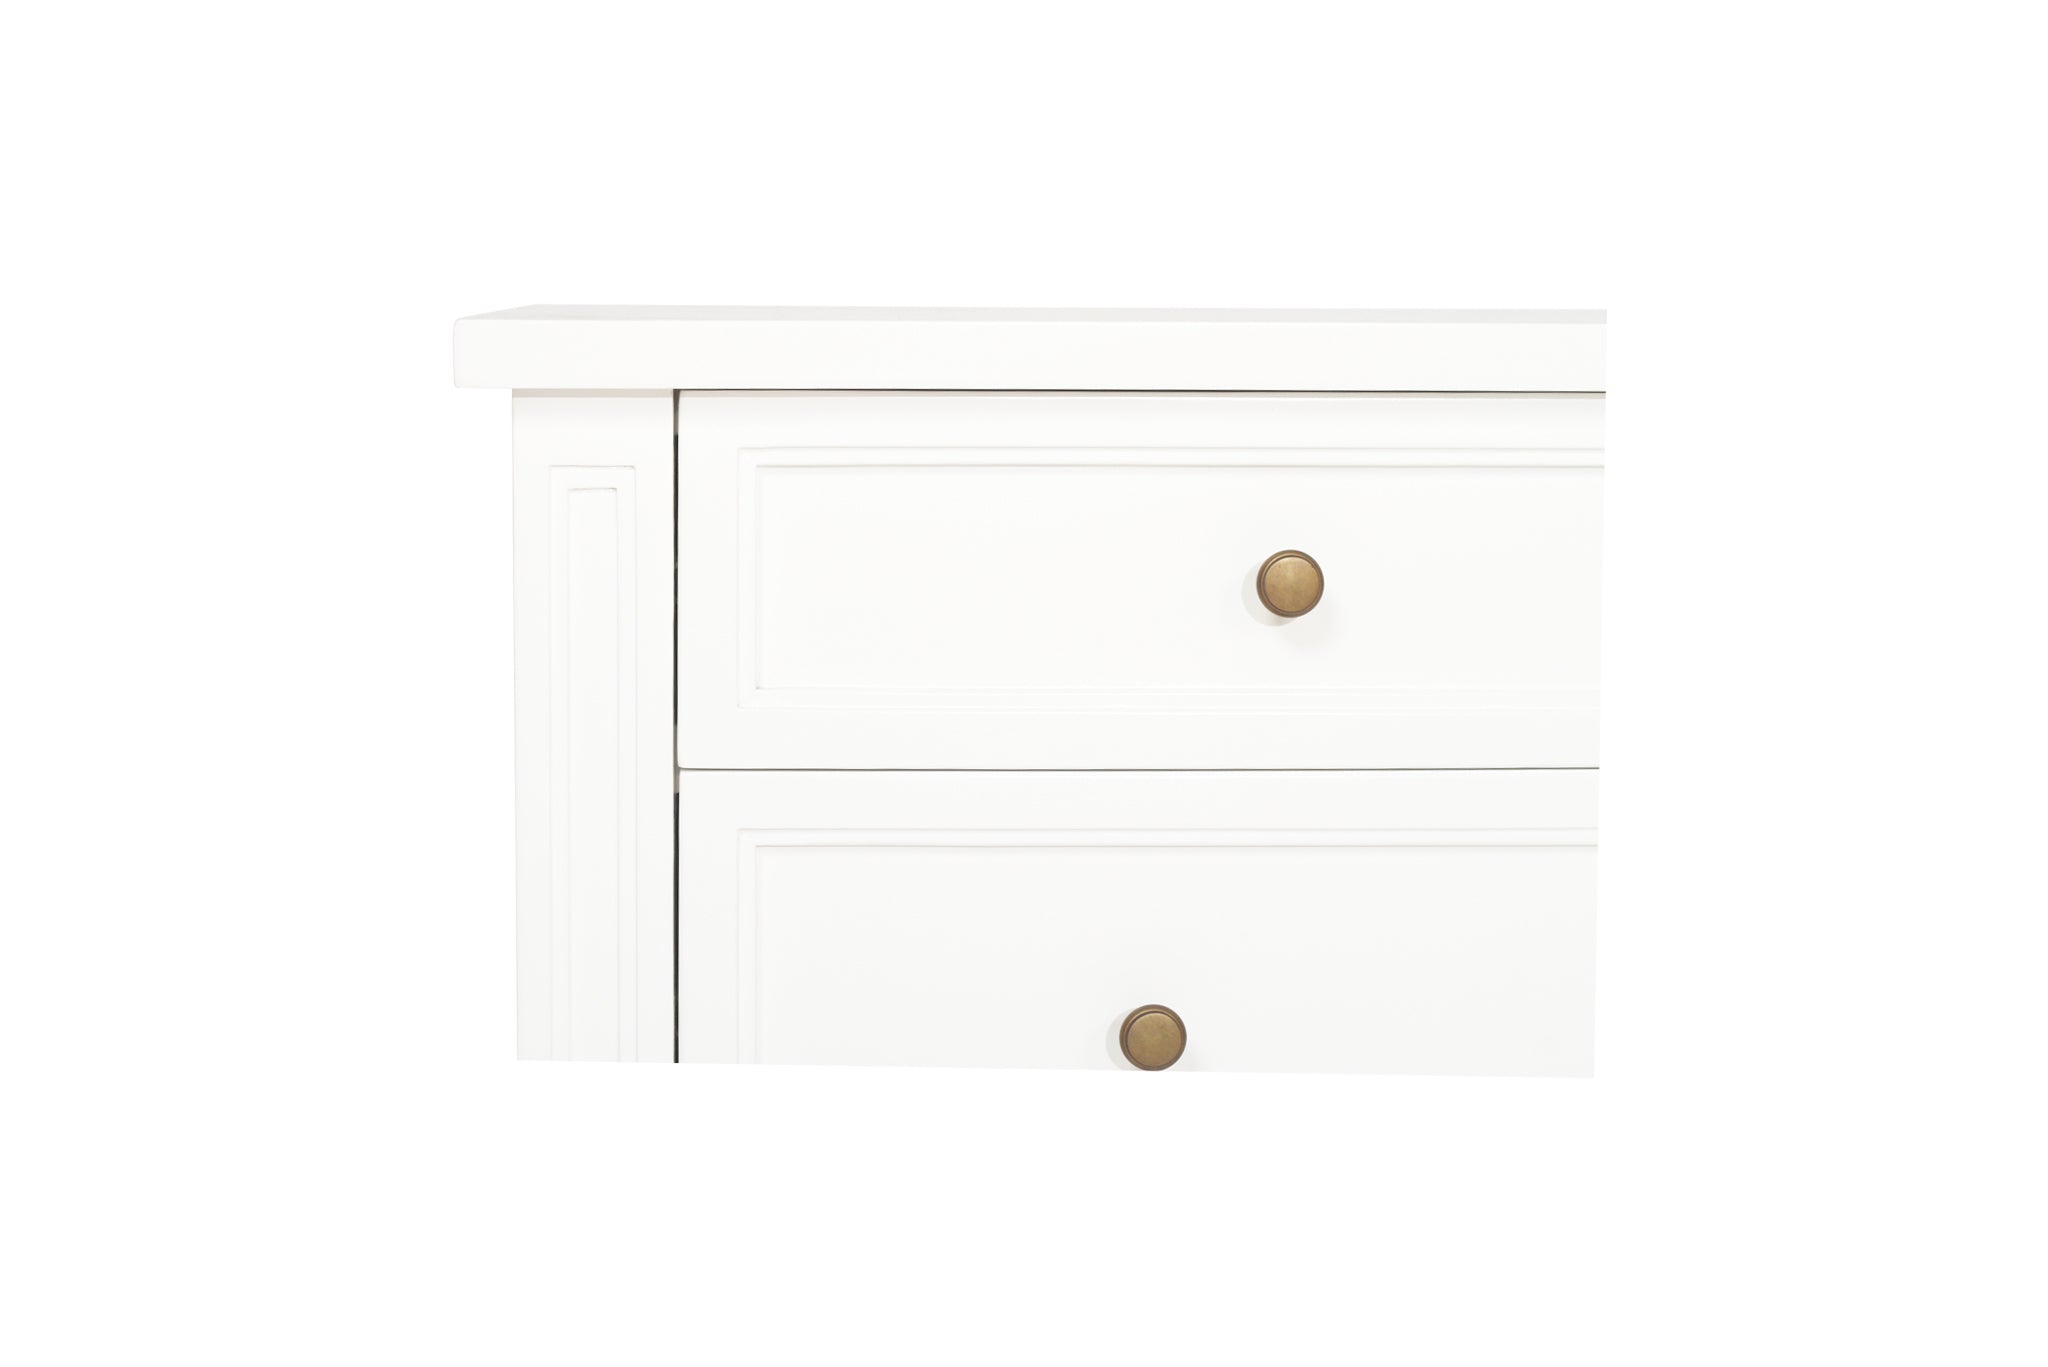 Vaucluse Mahogany Dresser – White – 9 Drawer